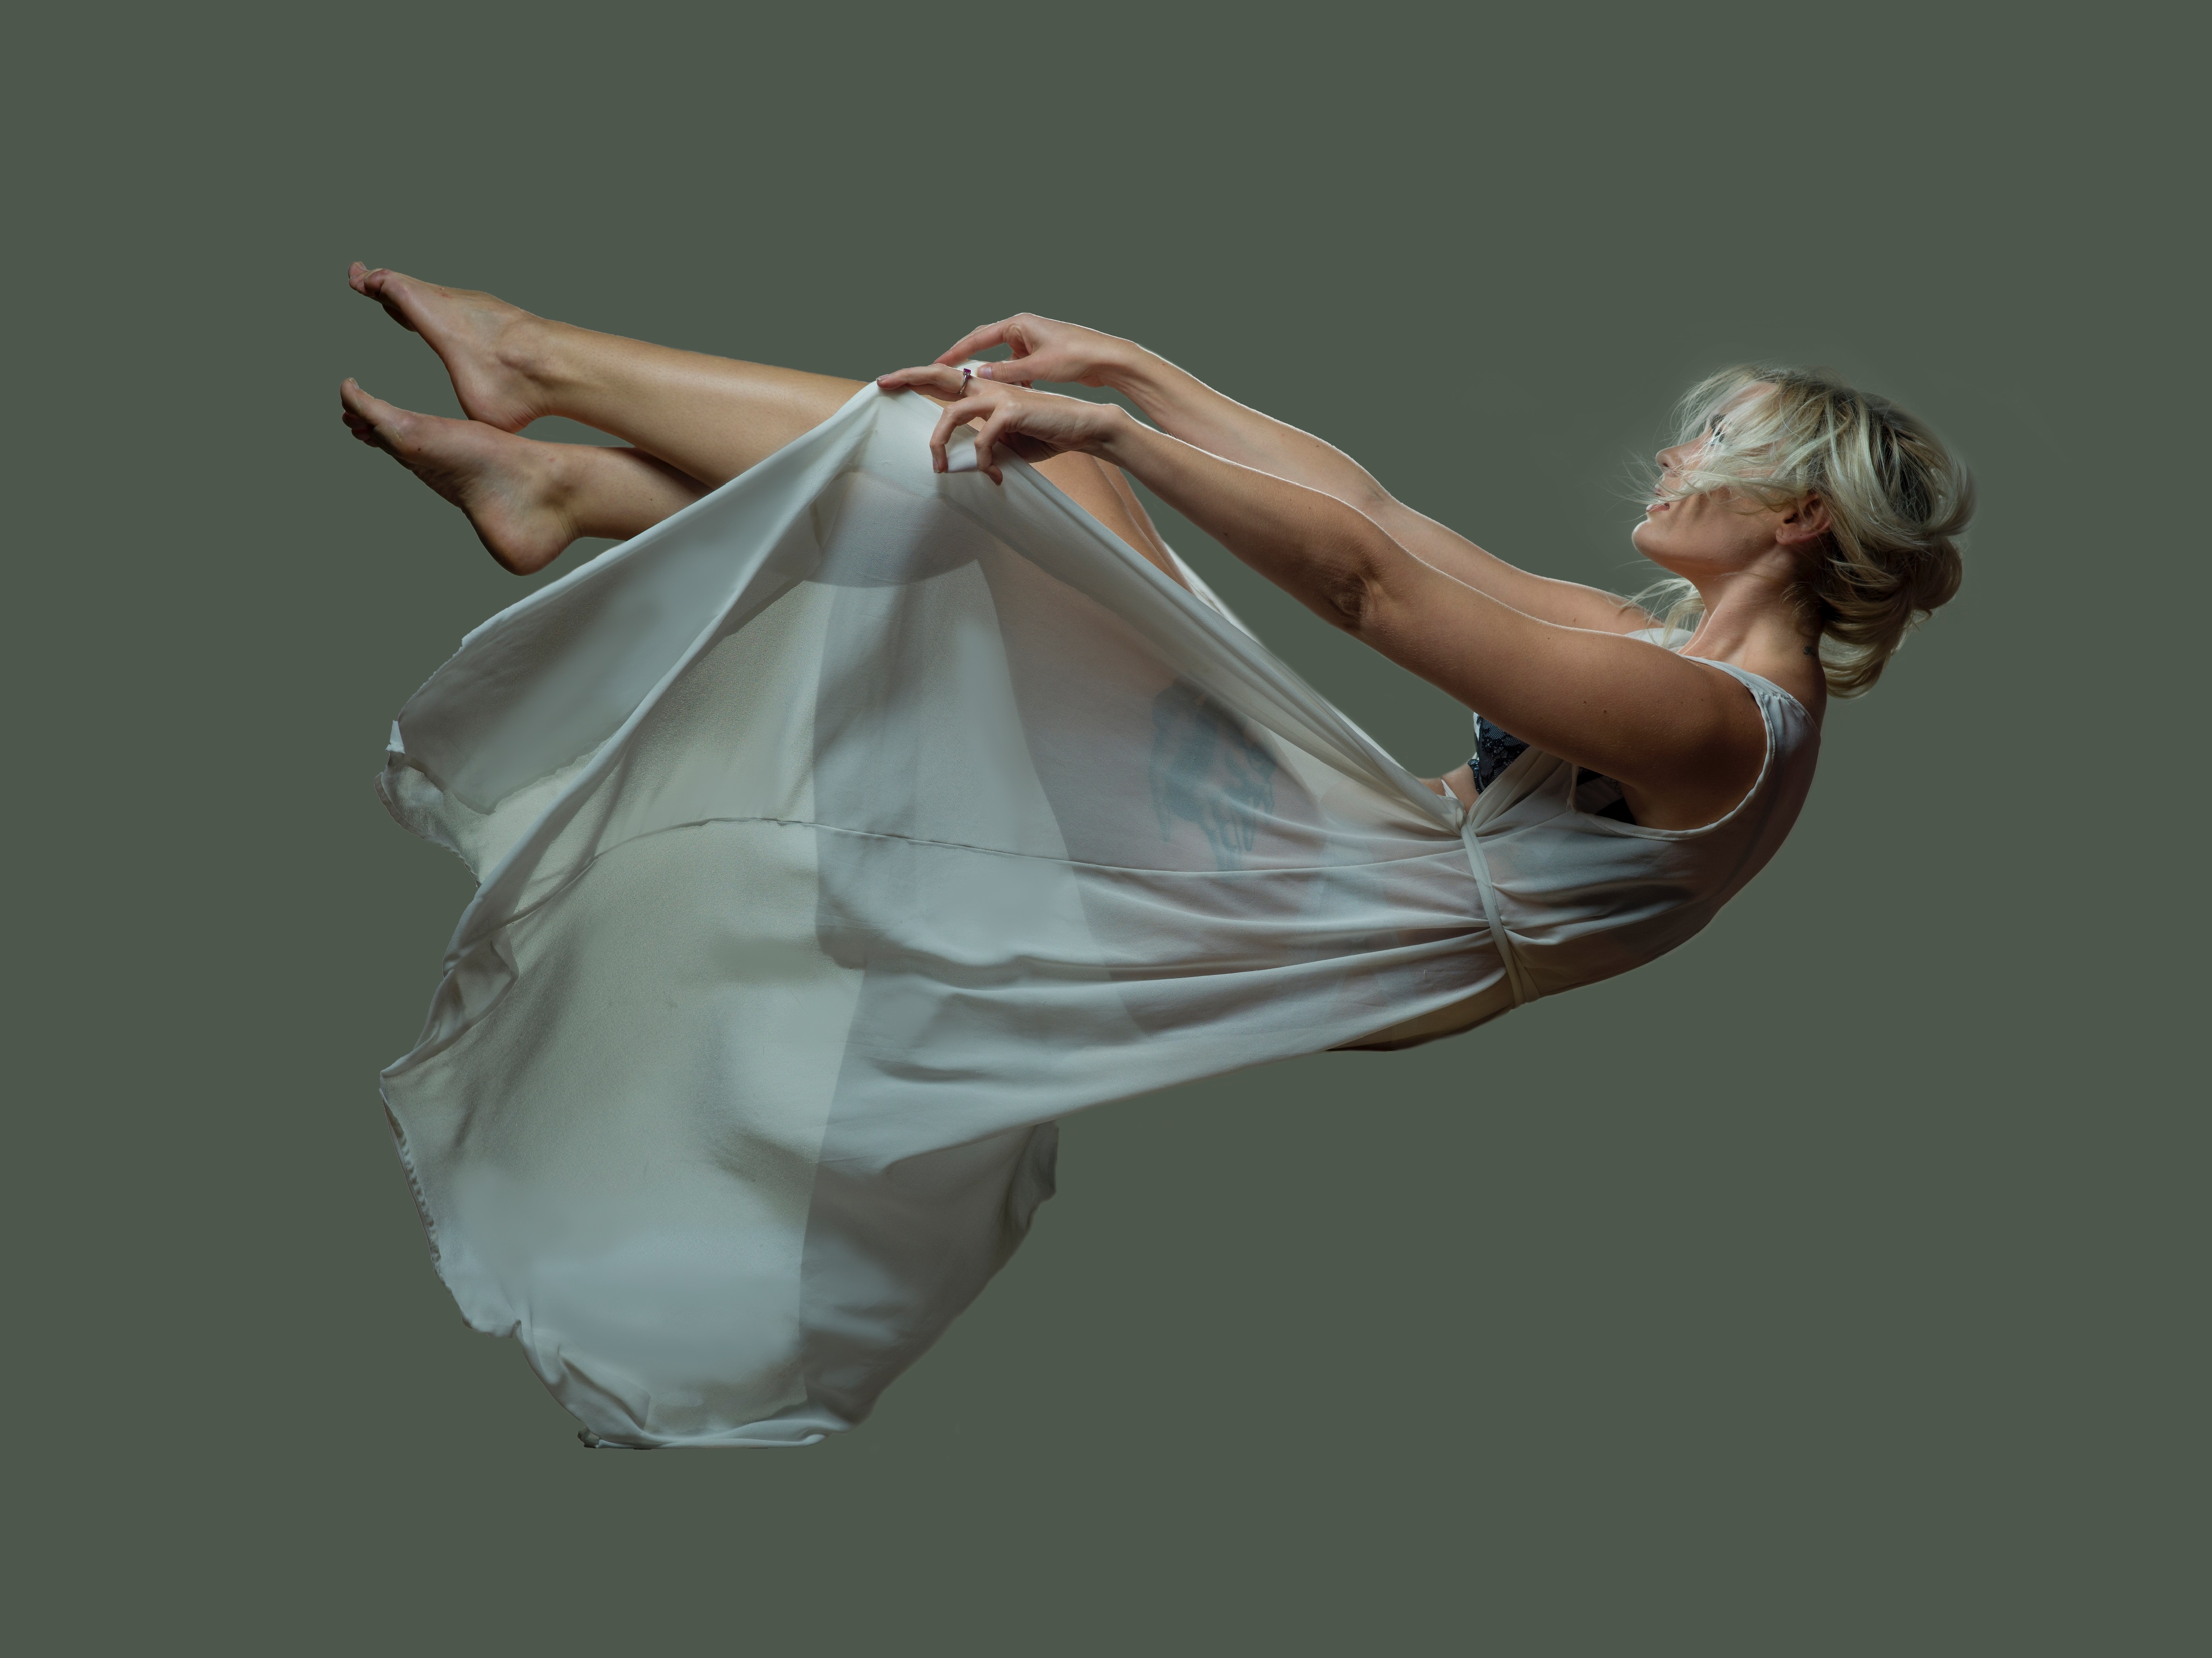 A woman falling. | Source: Pexels